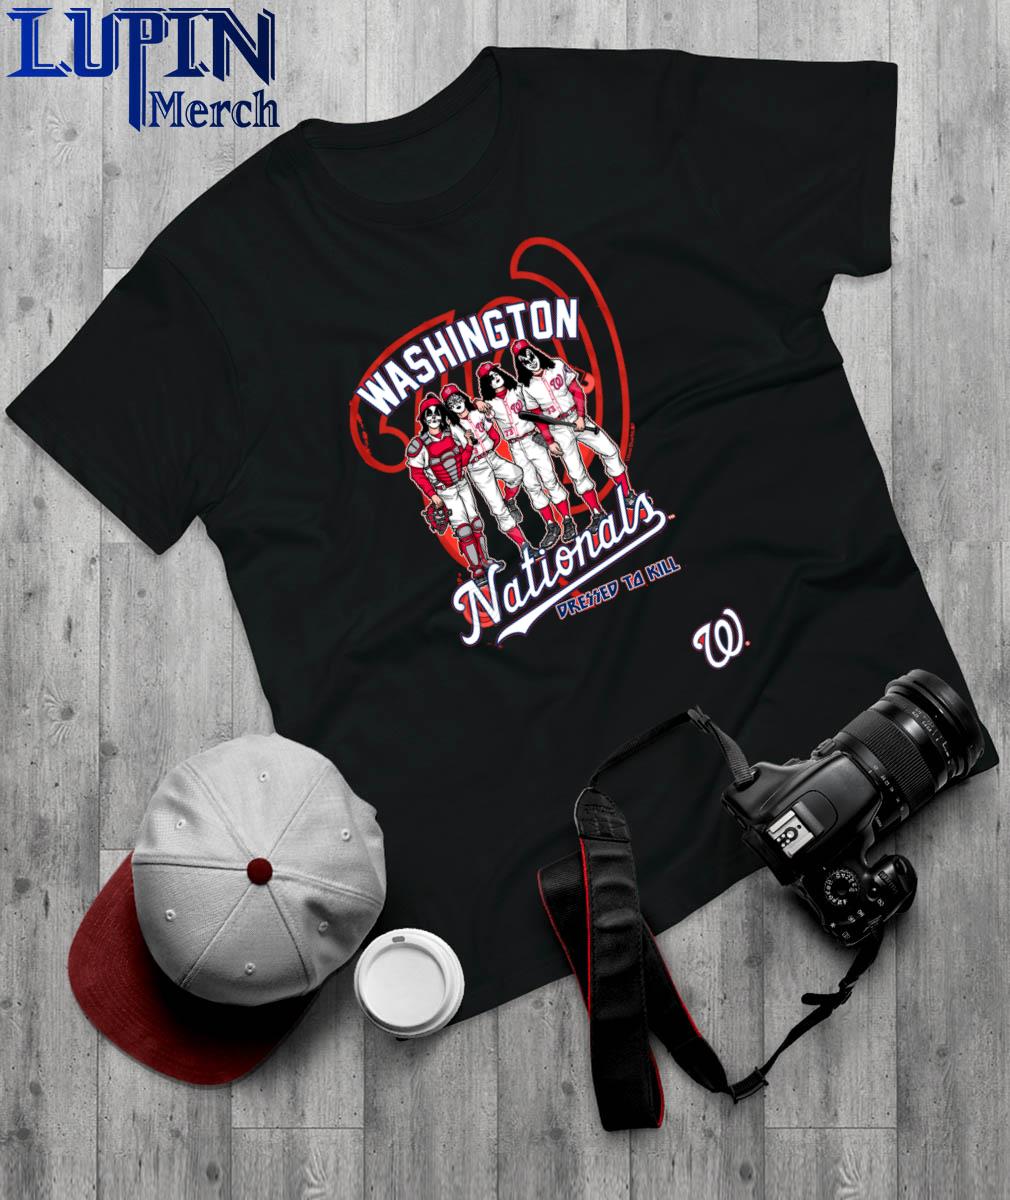 Nike Washington Nationals Championship Shirt